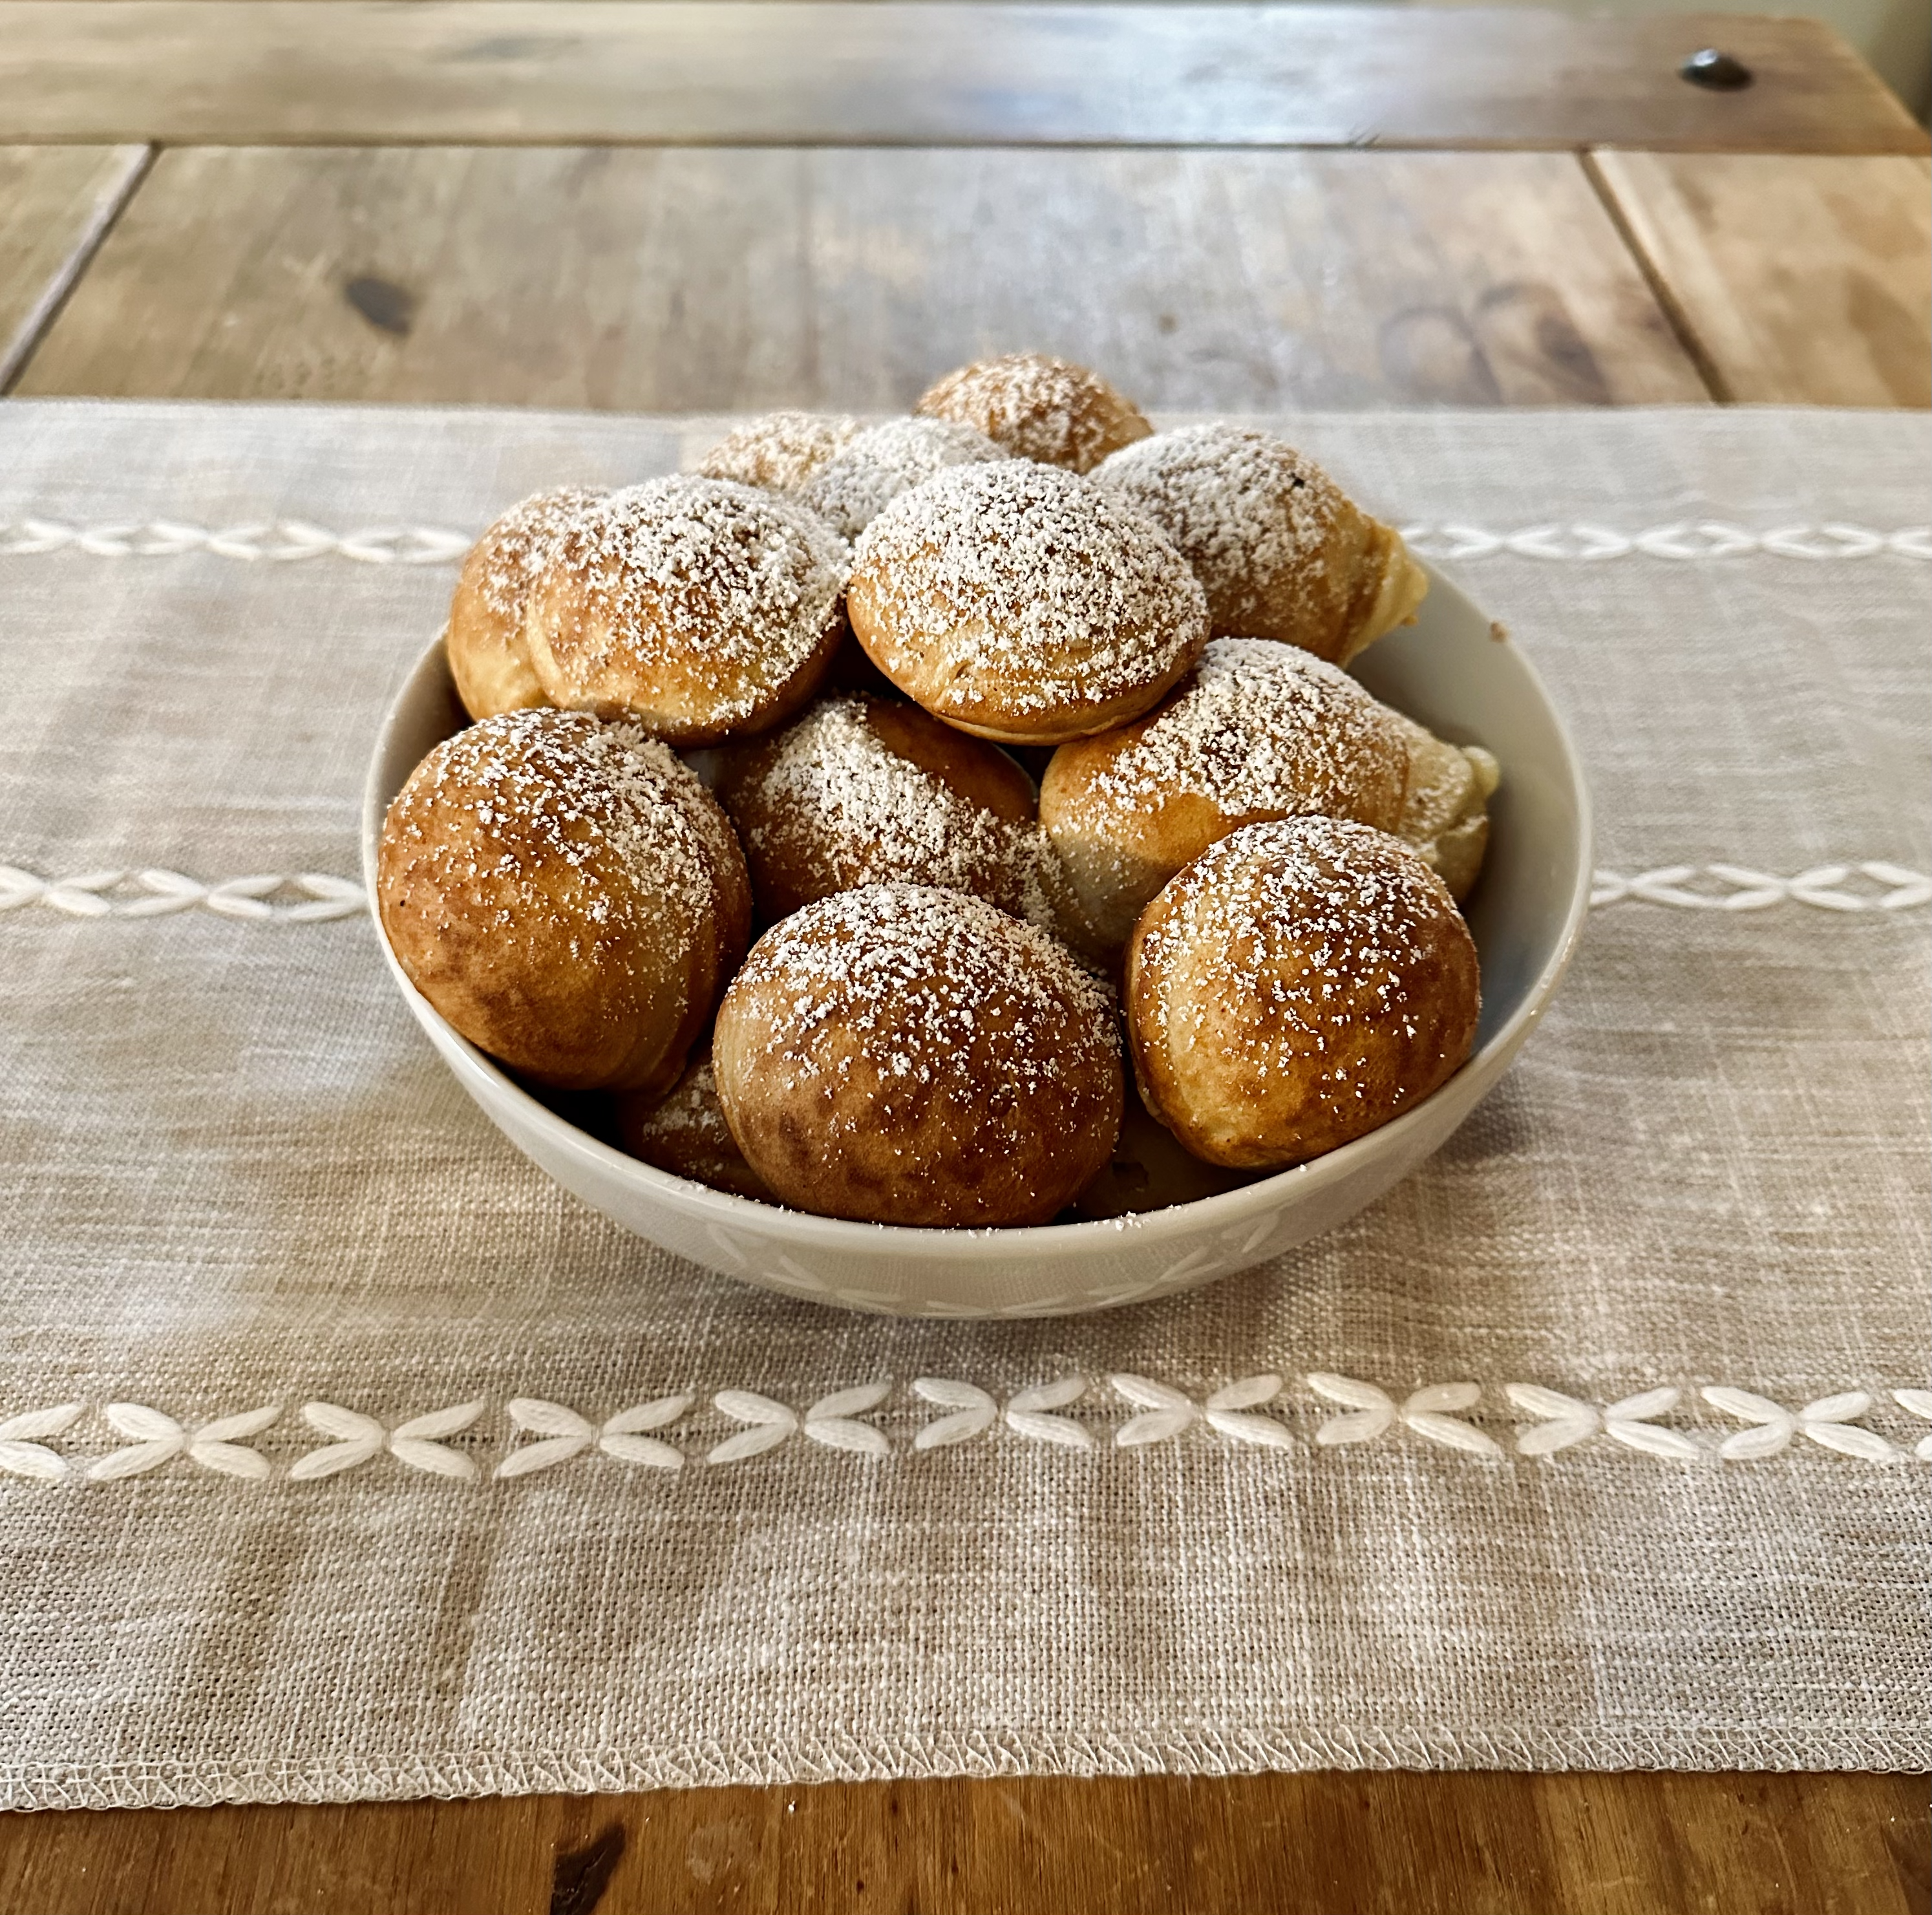 Ebelskivers, also known as Danish pancake balls